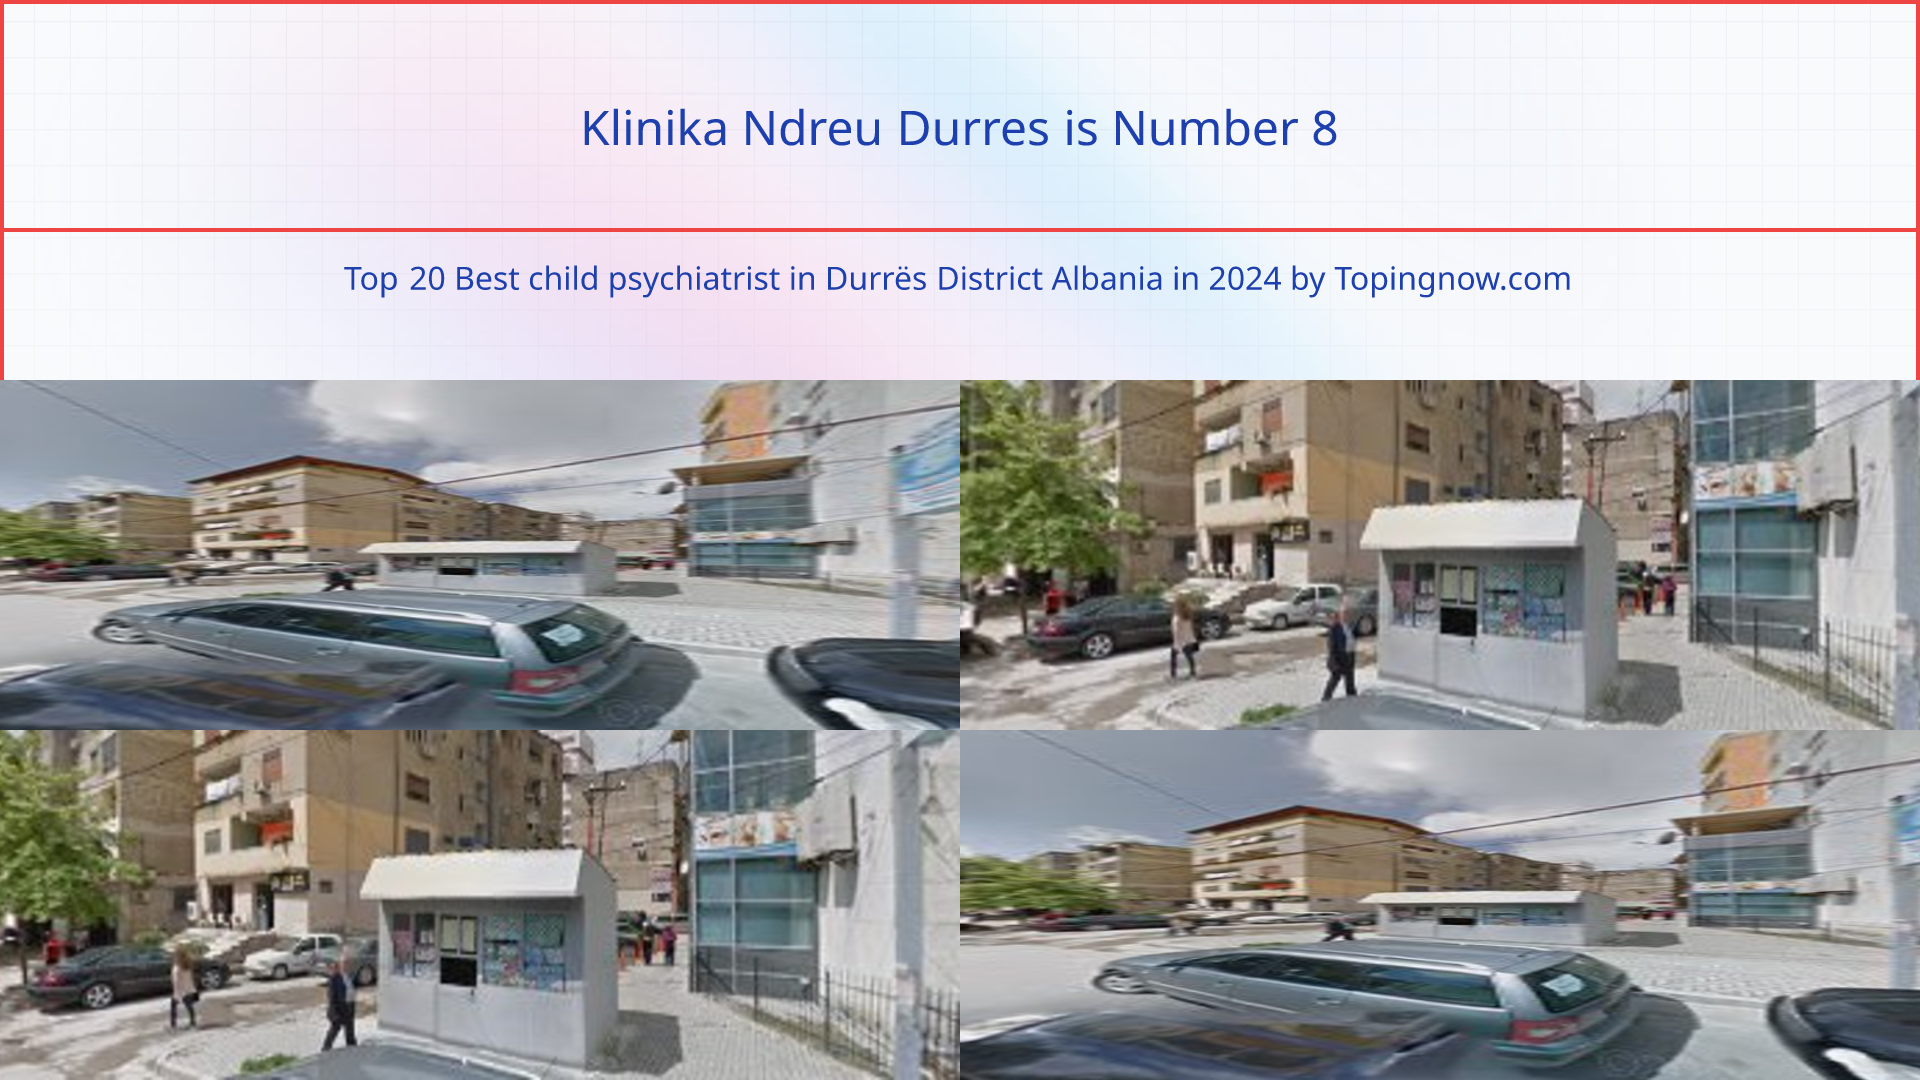 Klinika Ndreu Durres: Top 20 Best child psychiatrist in Durrës District Albania in 2024